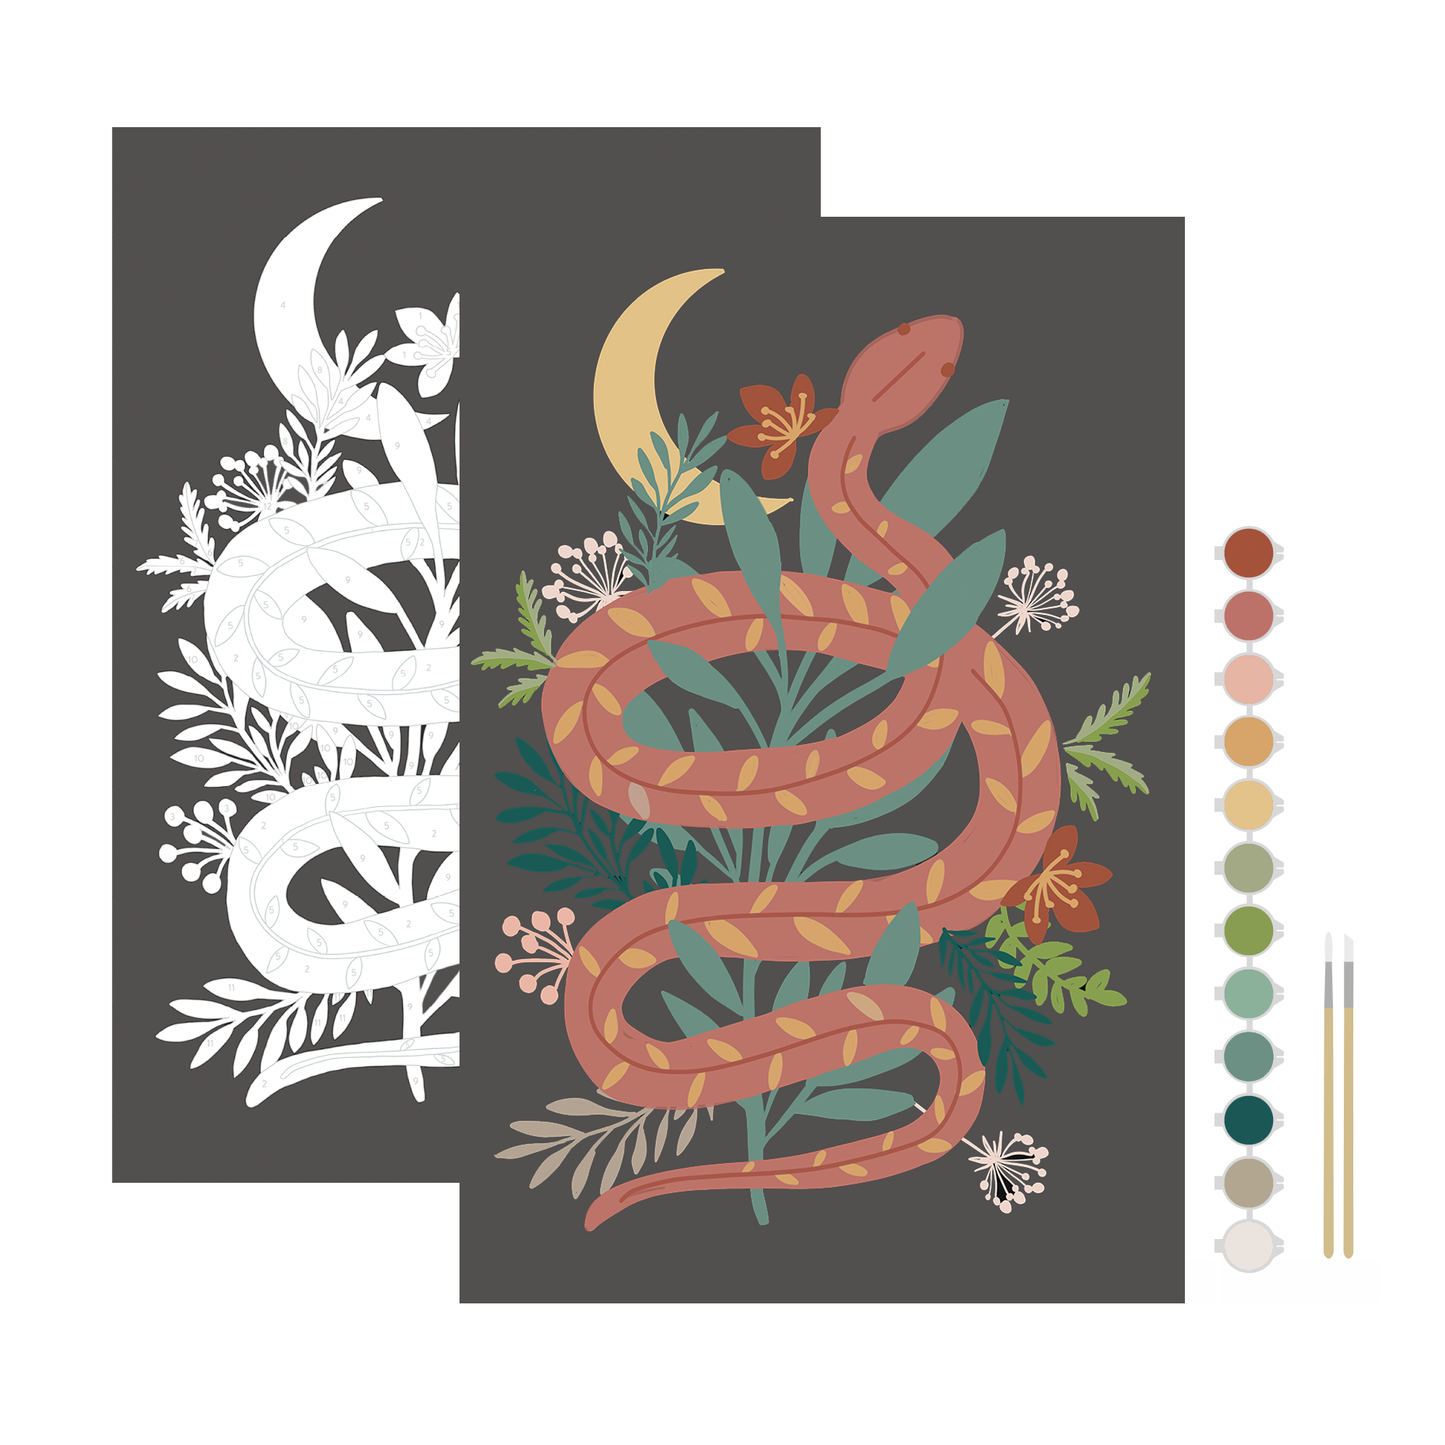 Floral Snake Meditative Art Paint by Number Kit